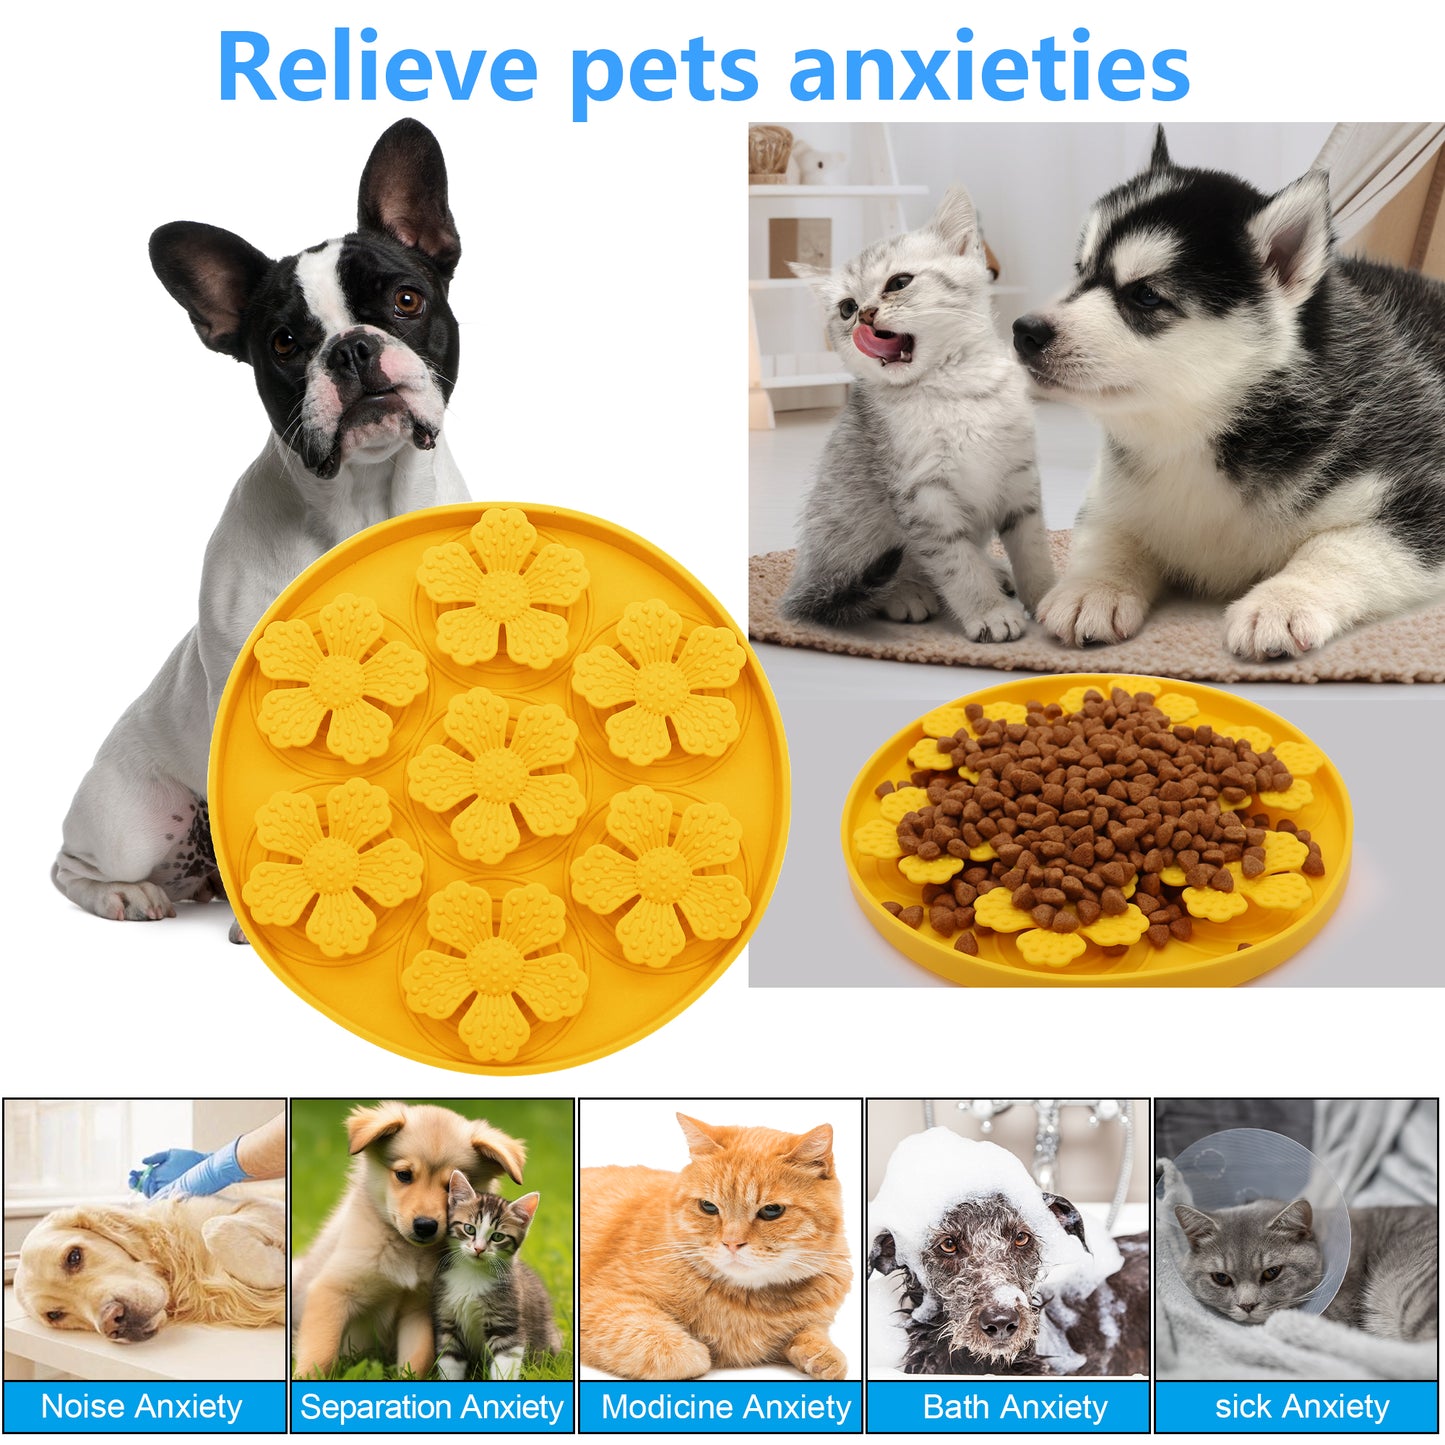 Royal Pets Silicone Pet Slow Feeding Lick Mat Round Yellow - Food Grade Safety